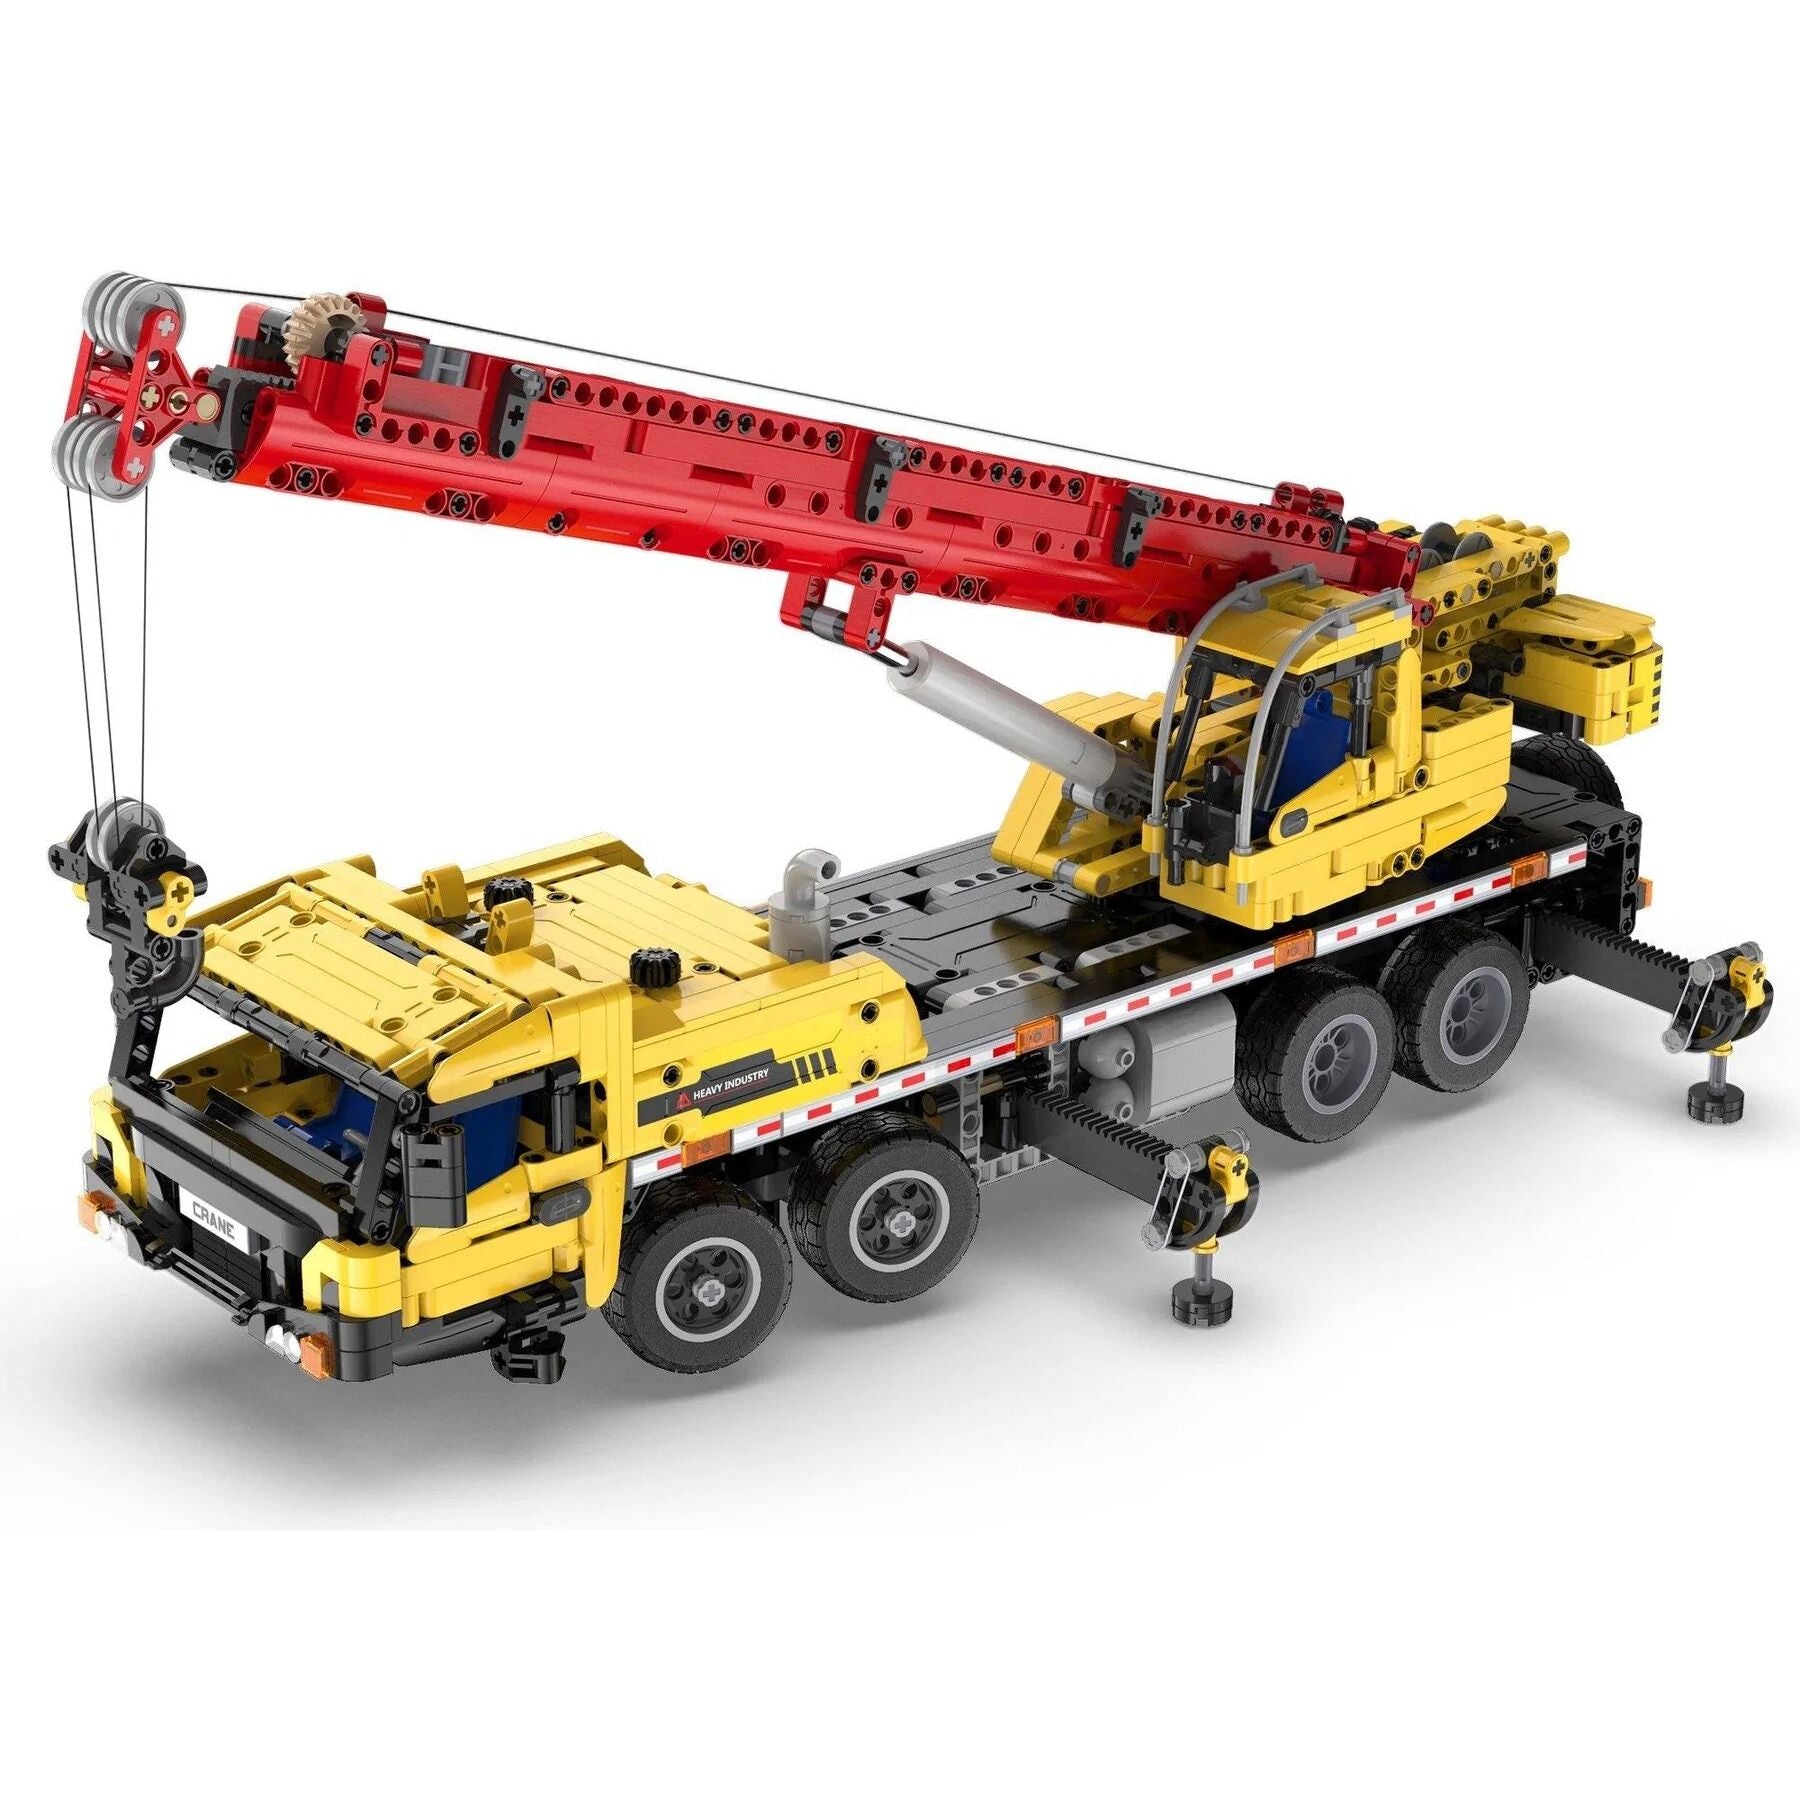 CaDA Mobile Extension Crane Construction Series (Non-Motorized) Brick Building Set 1,831 Pieces